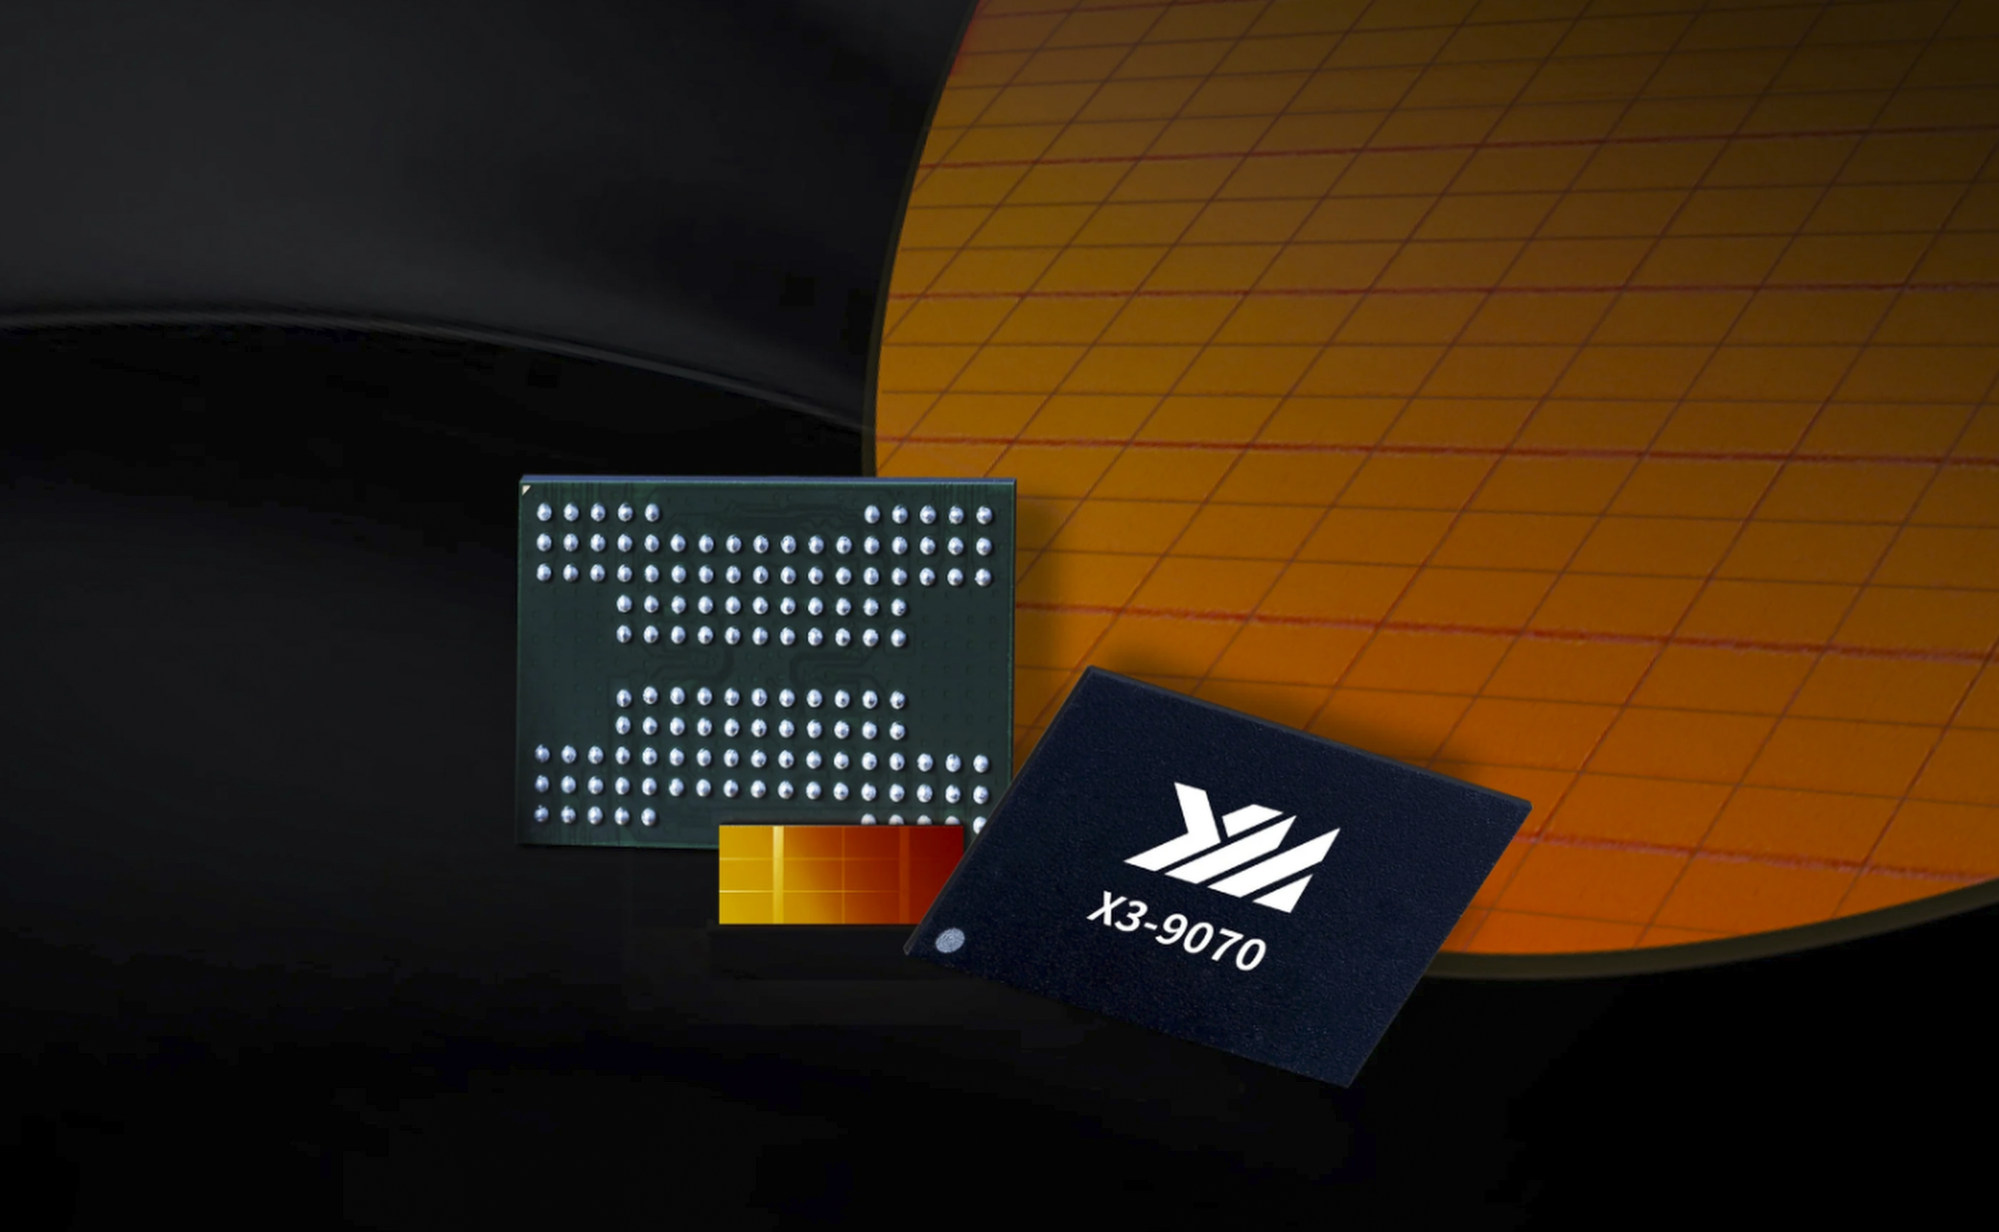 Yangtze Memory Technologies Corp’s fourth-generation TLC 3D flash memory. Photo: Handout